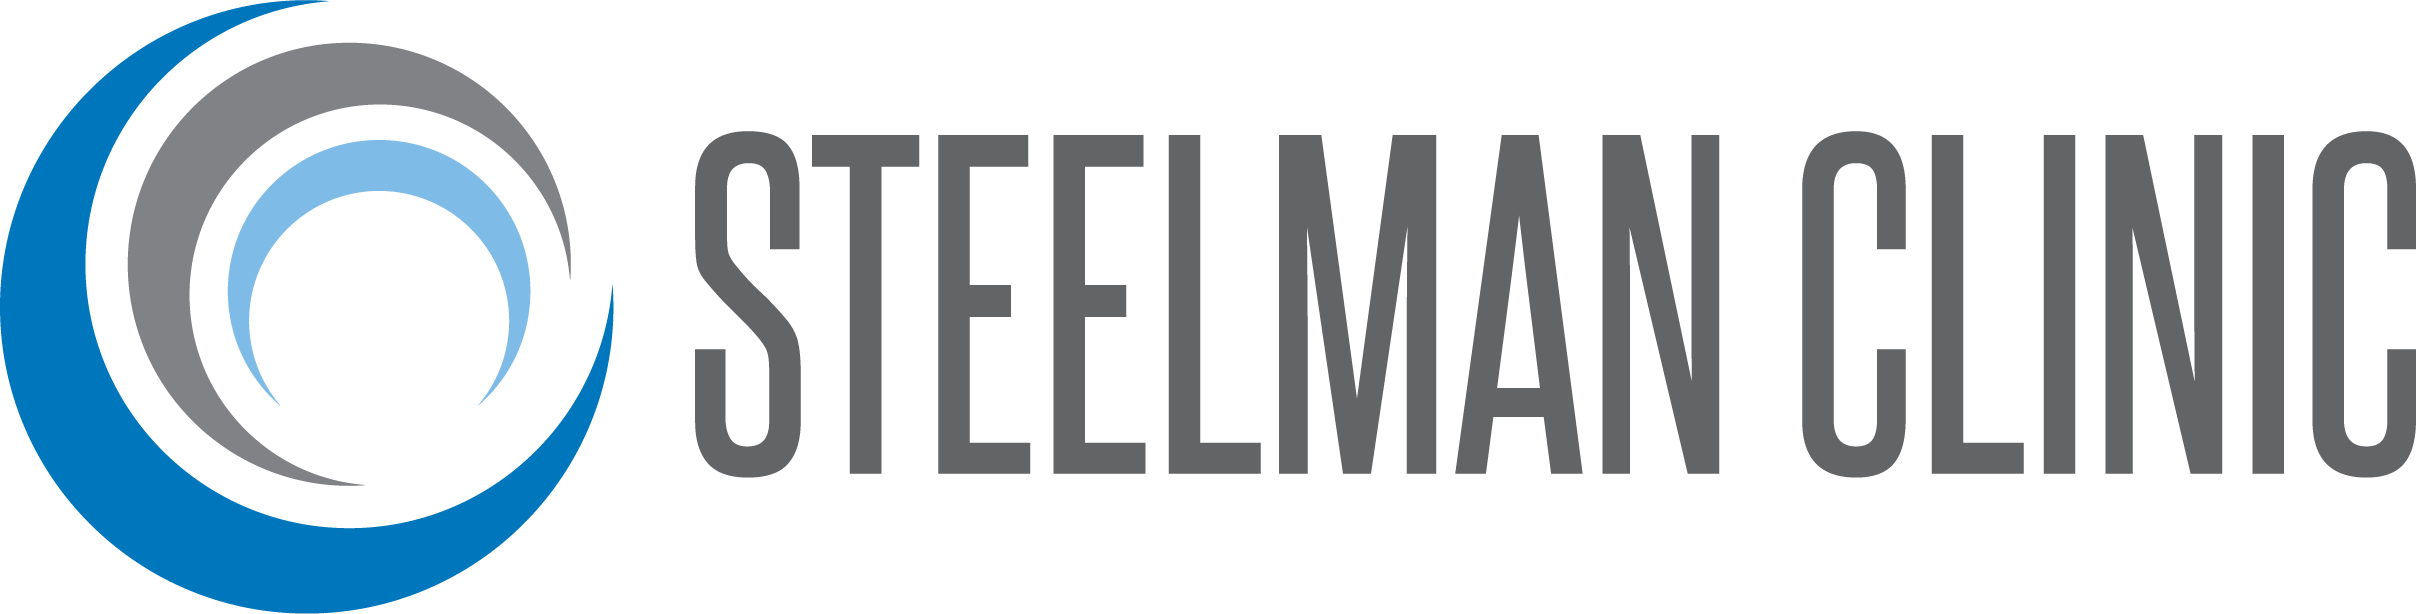 the steelman clinic okc logo